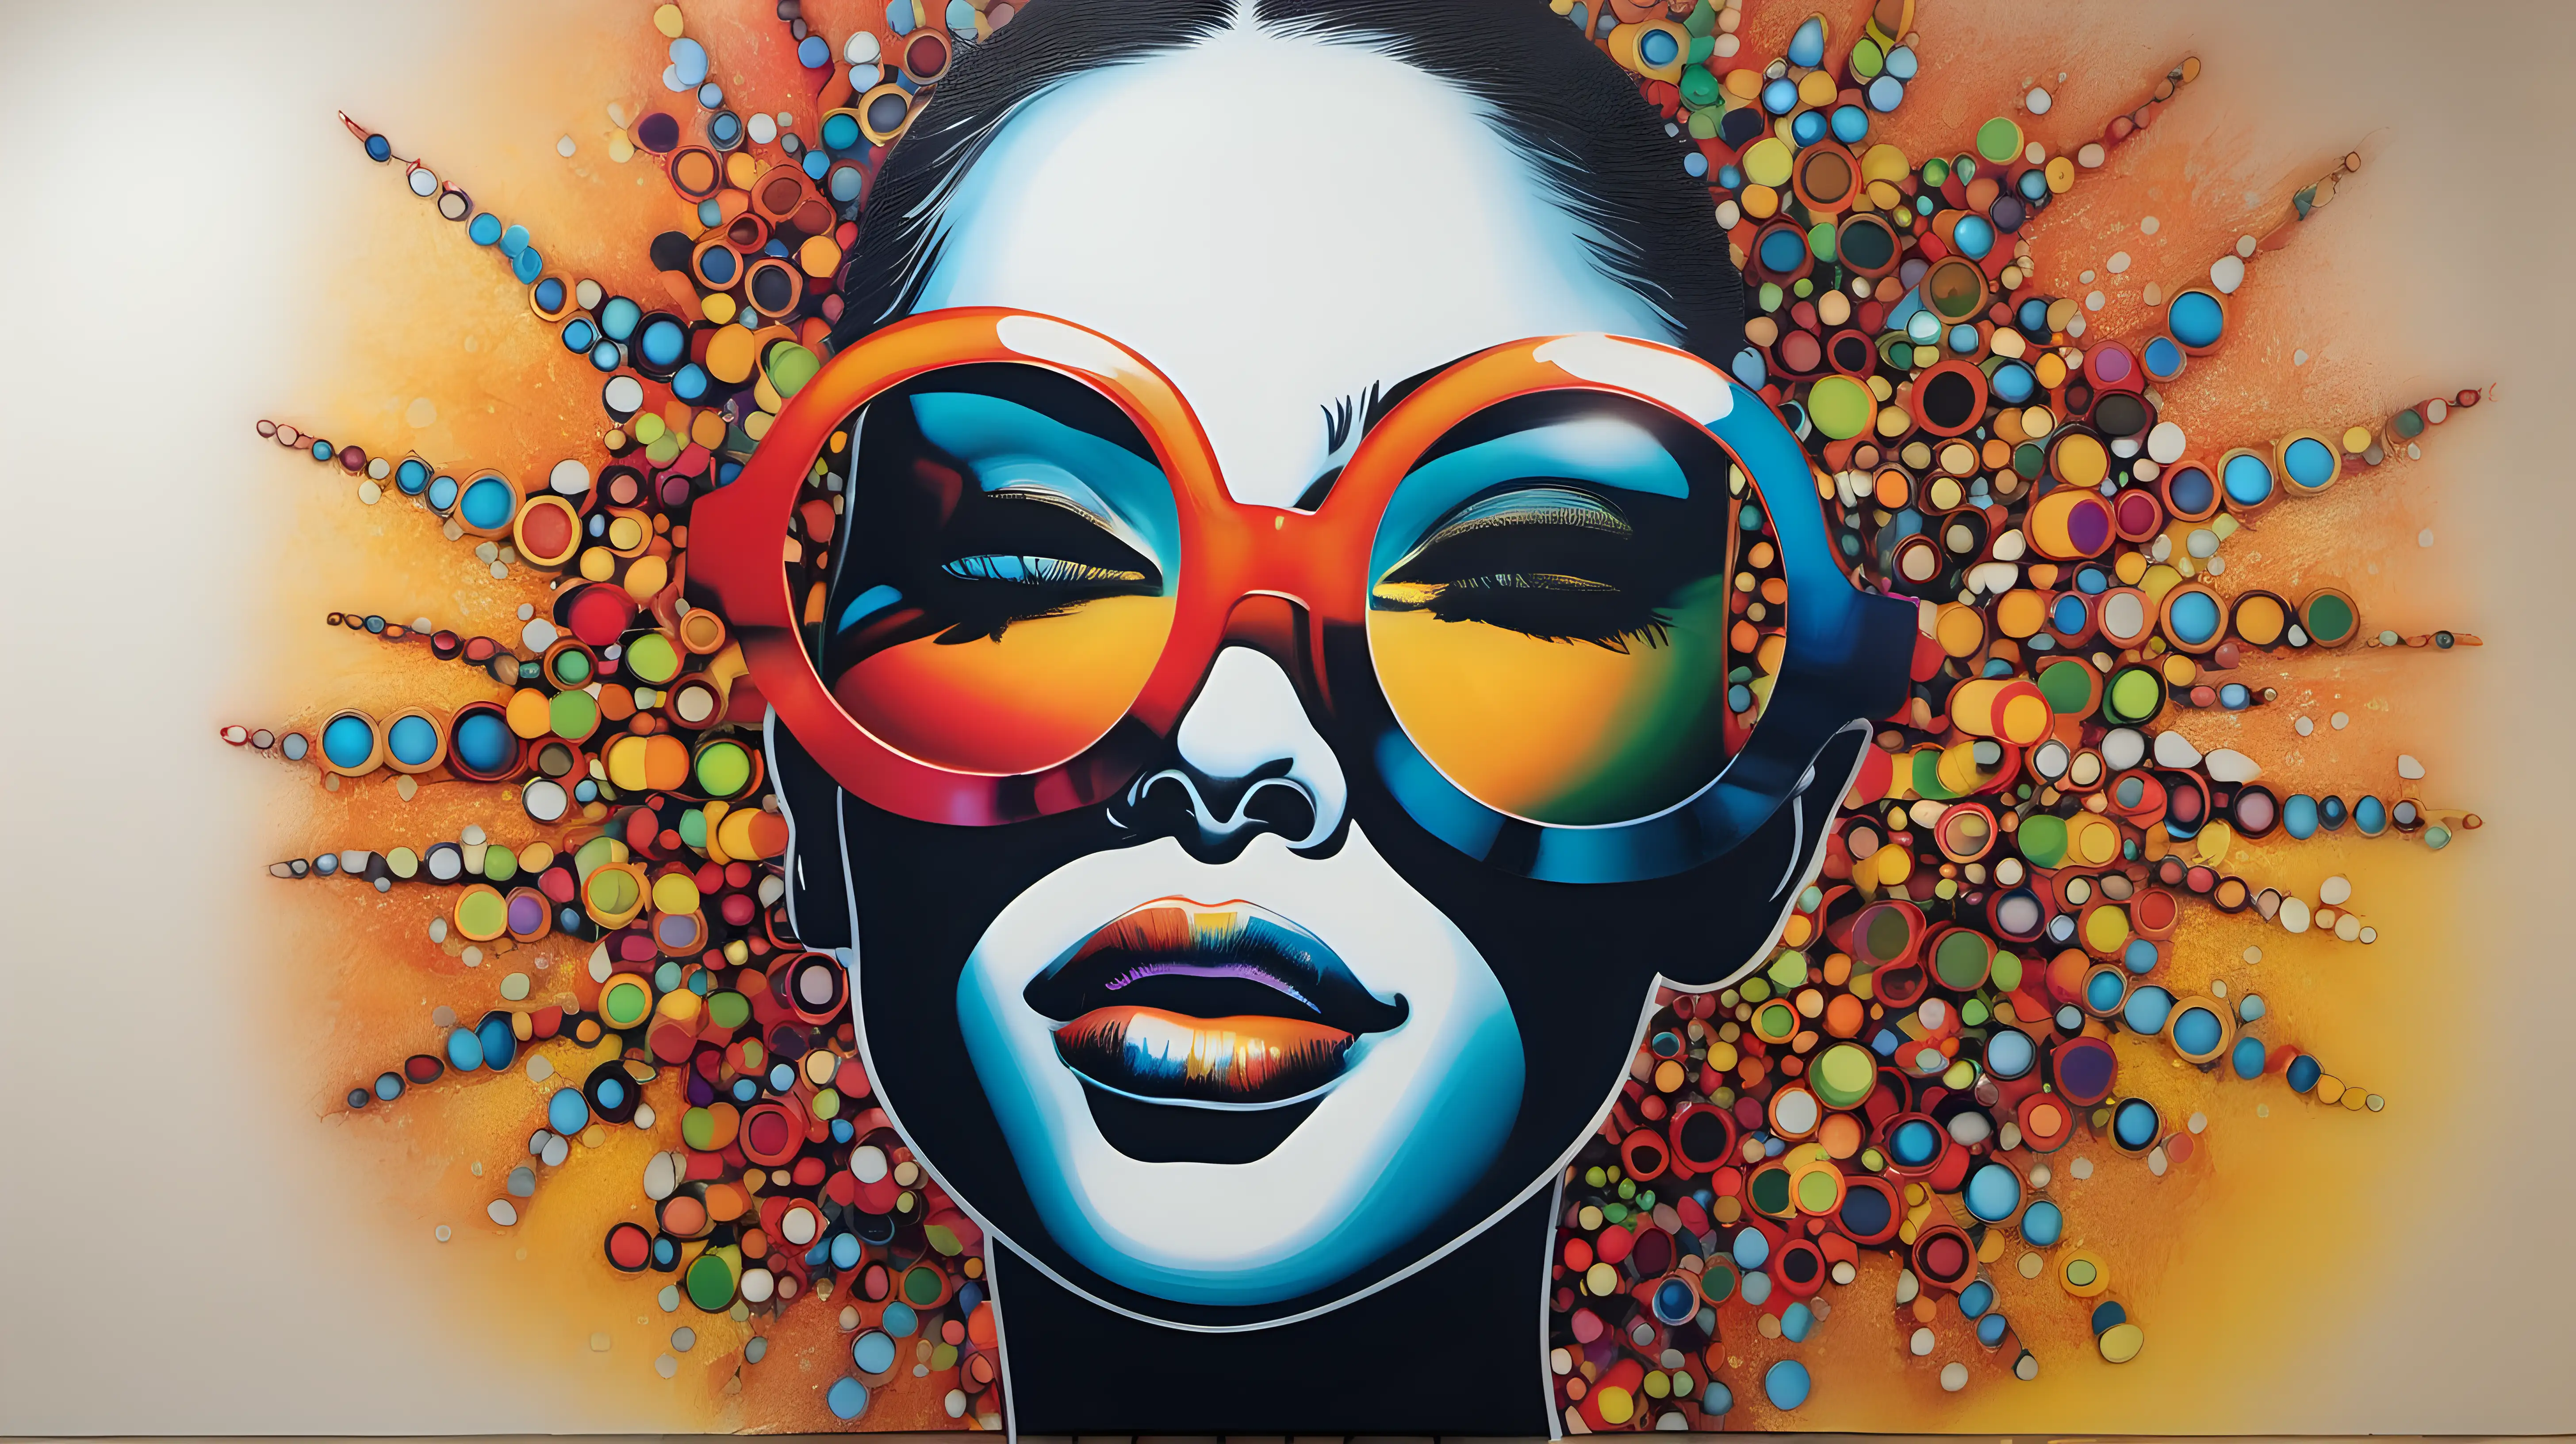 Vibrant Glasses Portrait Illustrating Positive Energy on a Clean Canvas Background